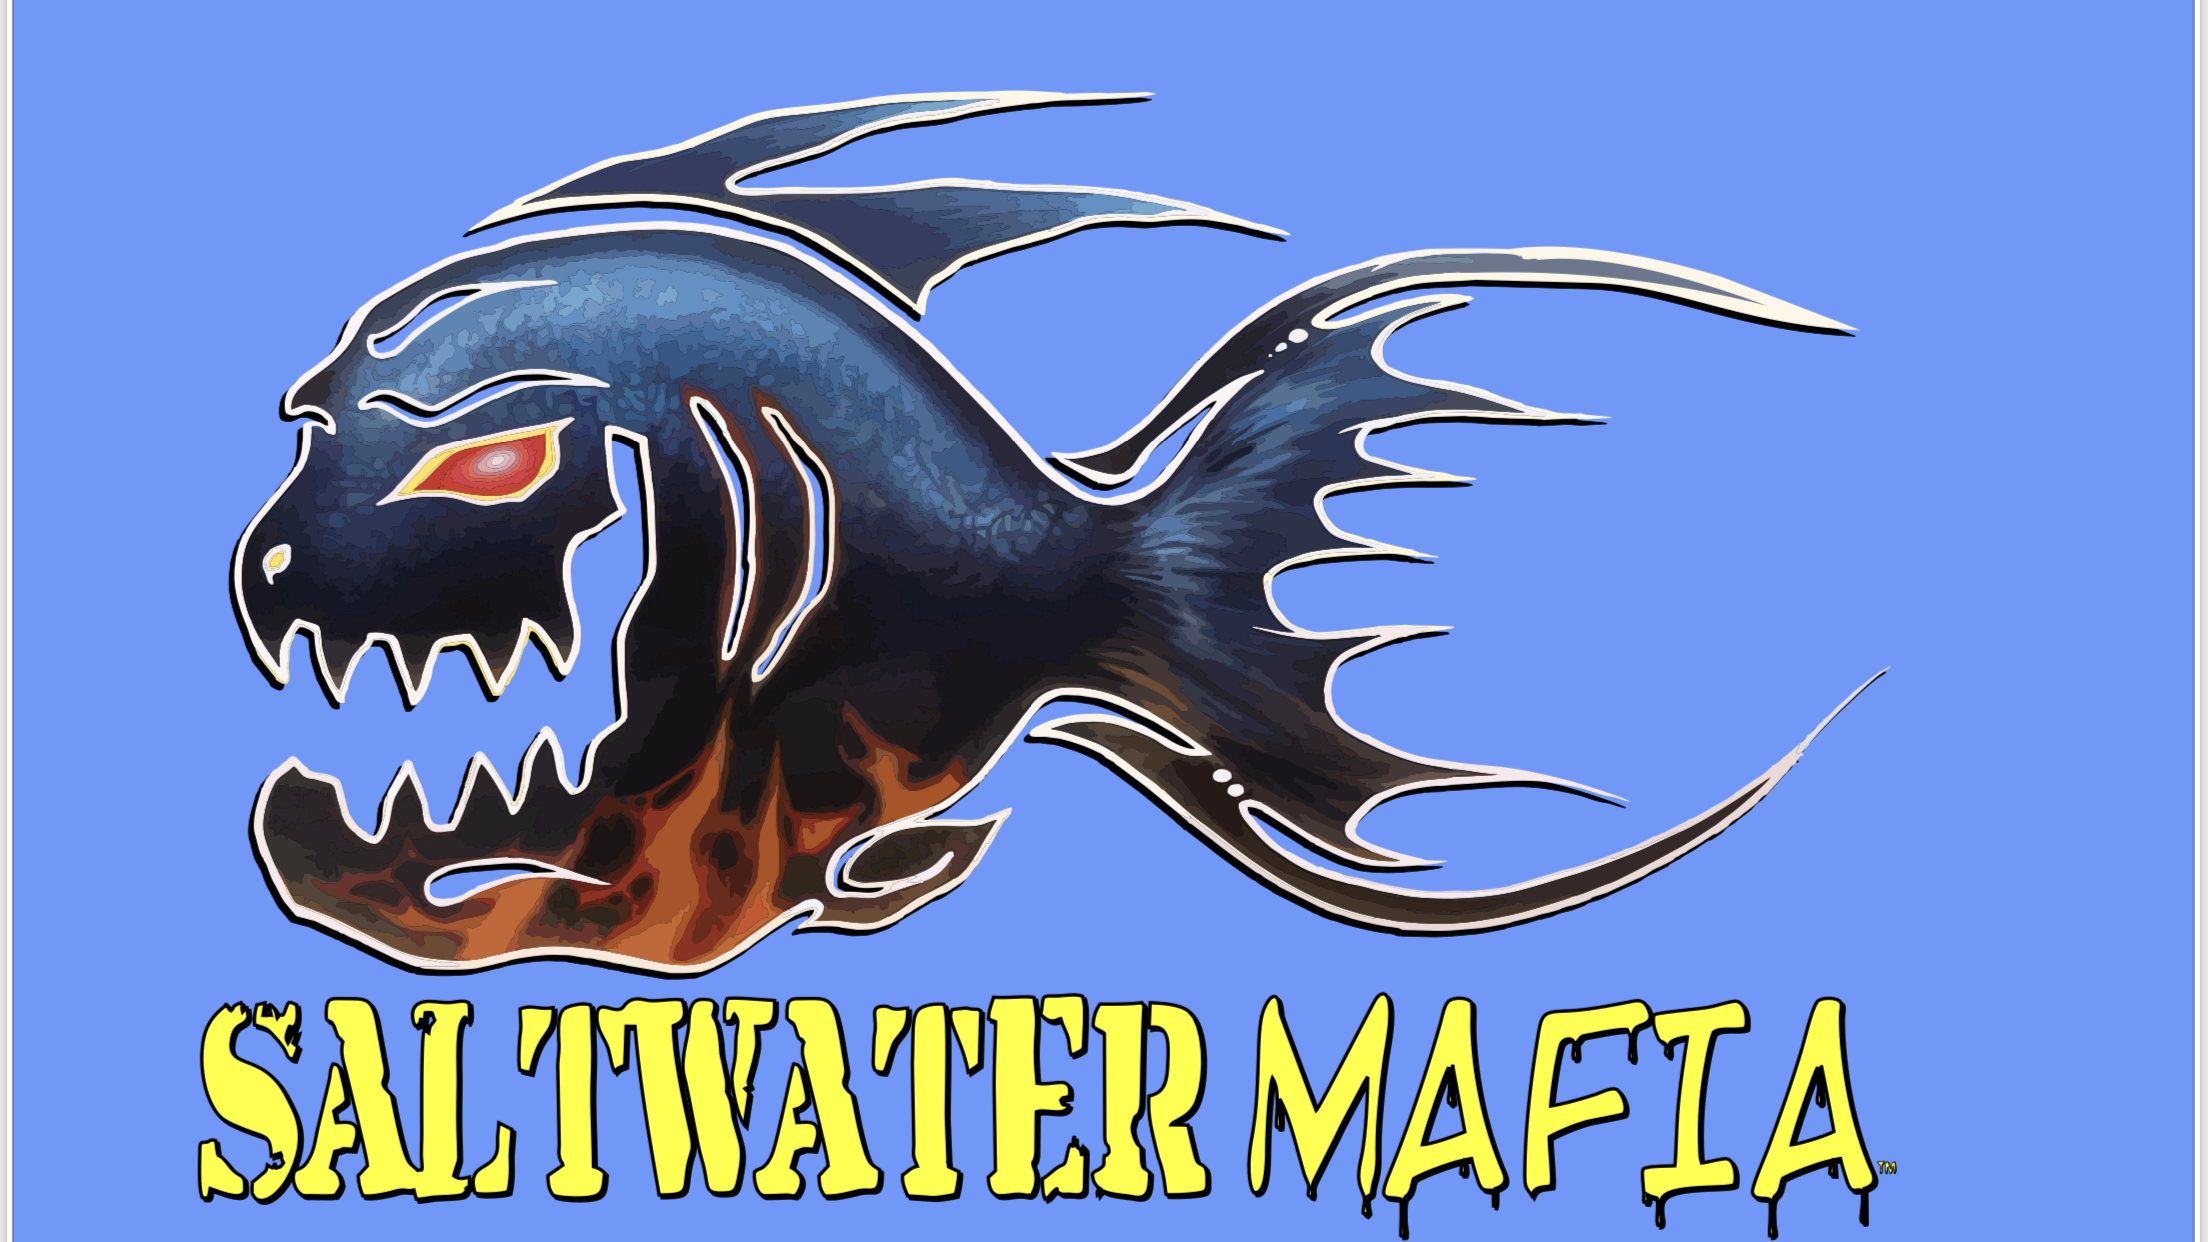 Boat Flags – Saltwater Mafia